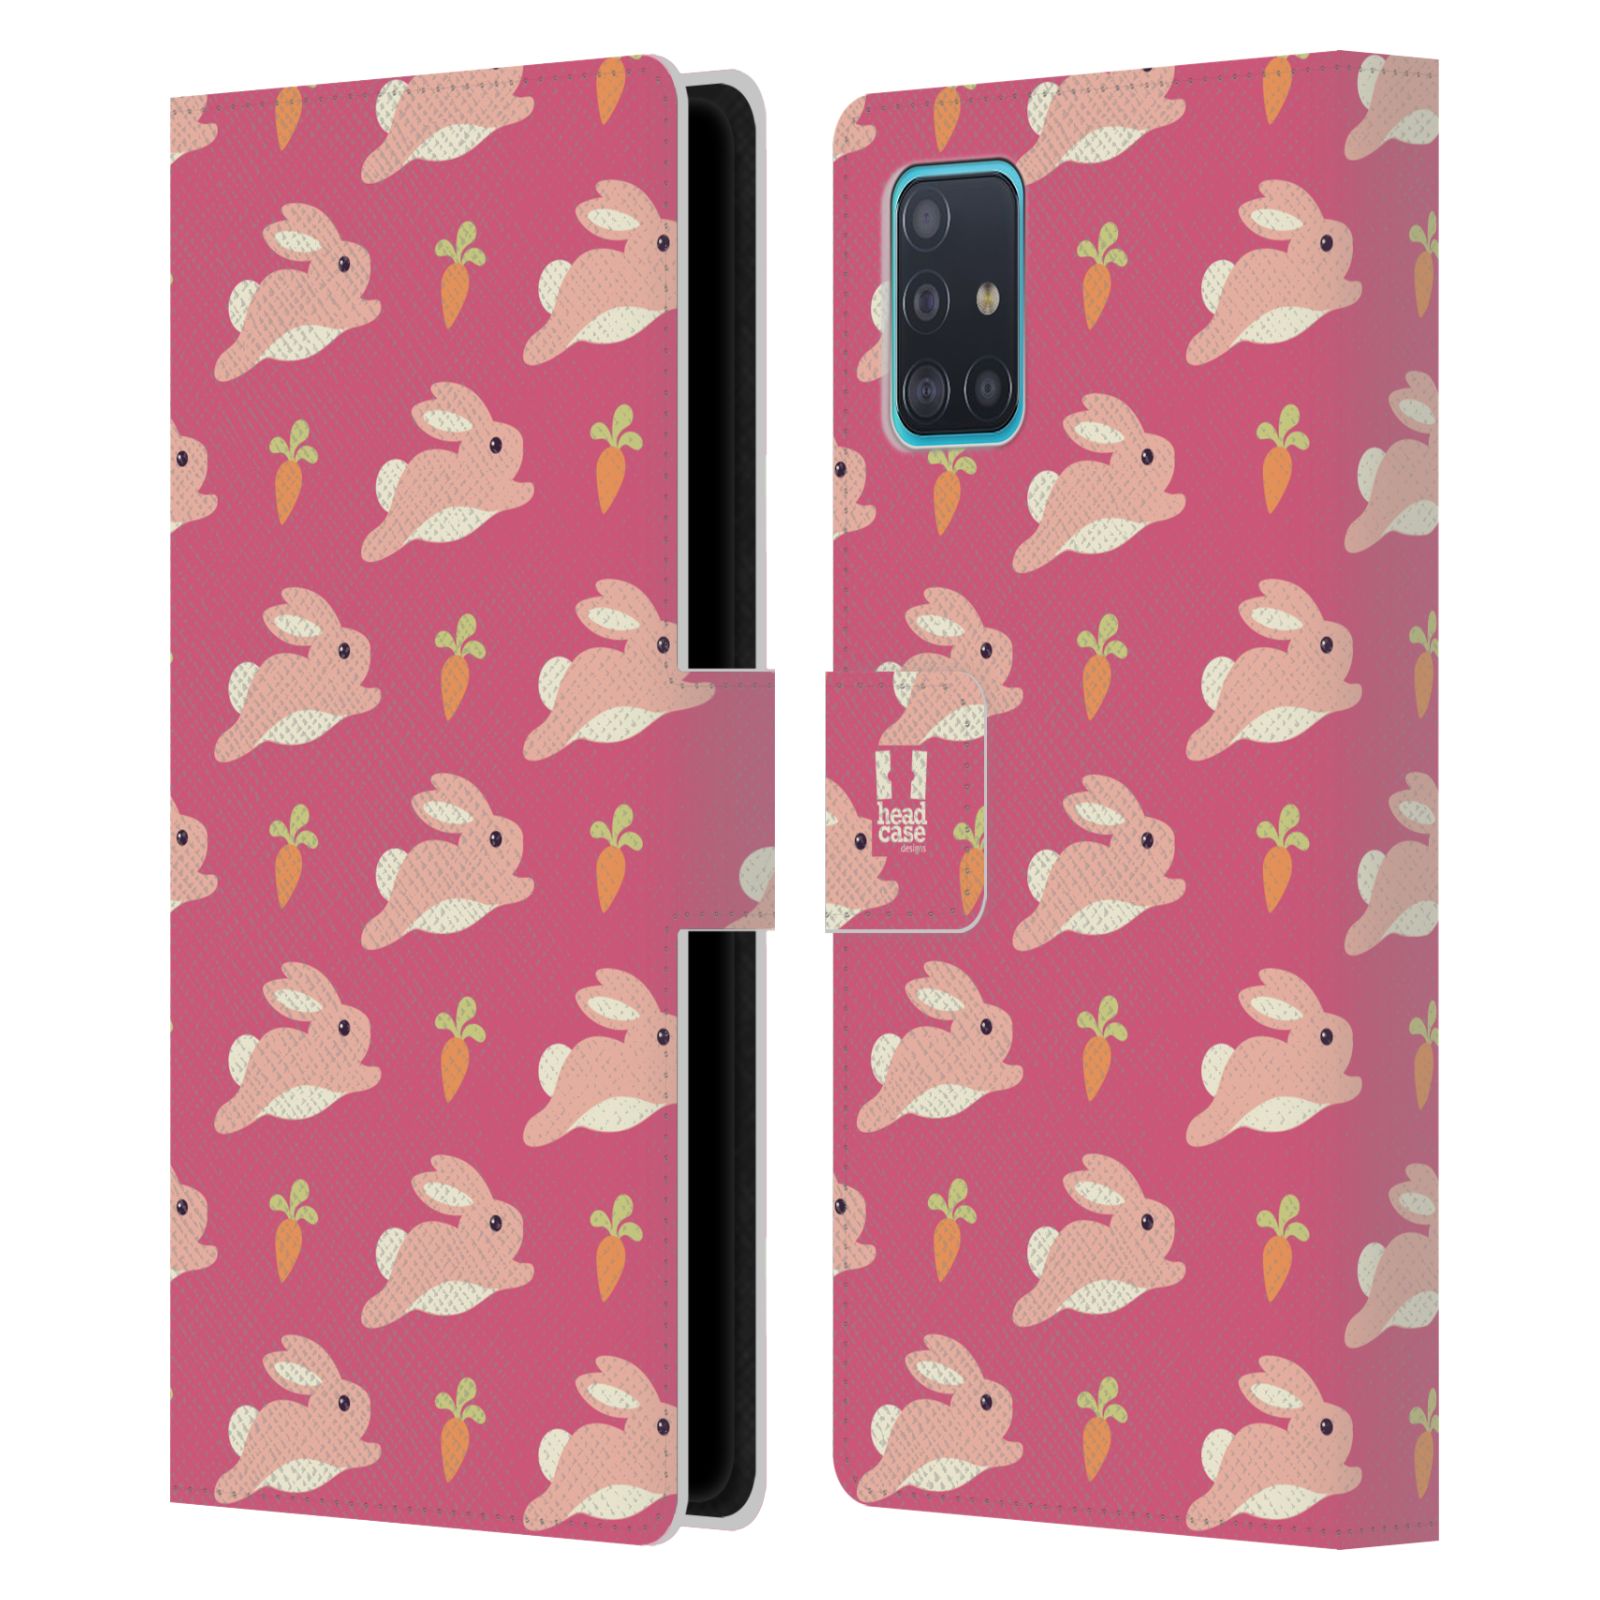 Pouzdro na mobil Samsung Galaxy A51 (A515F) barevný zvířecí vzor zajíček růžová